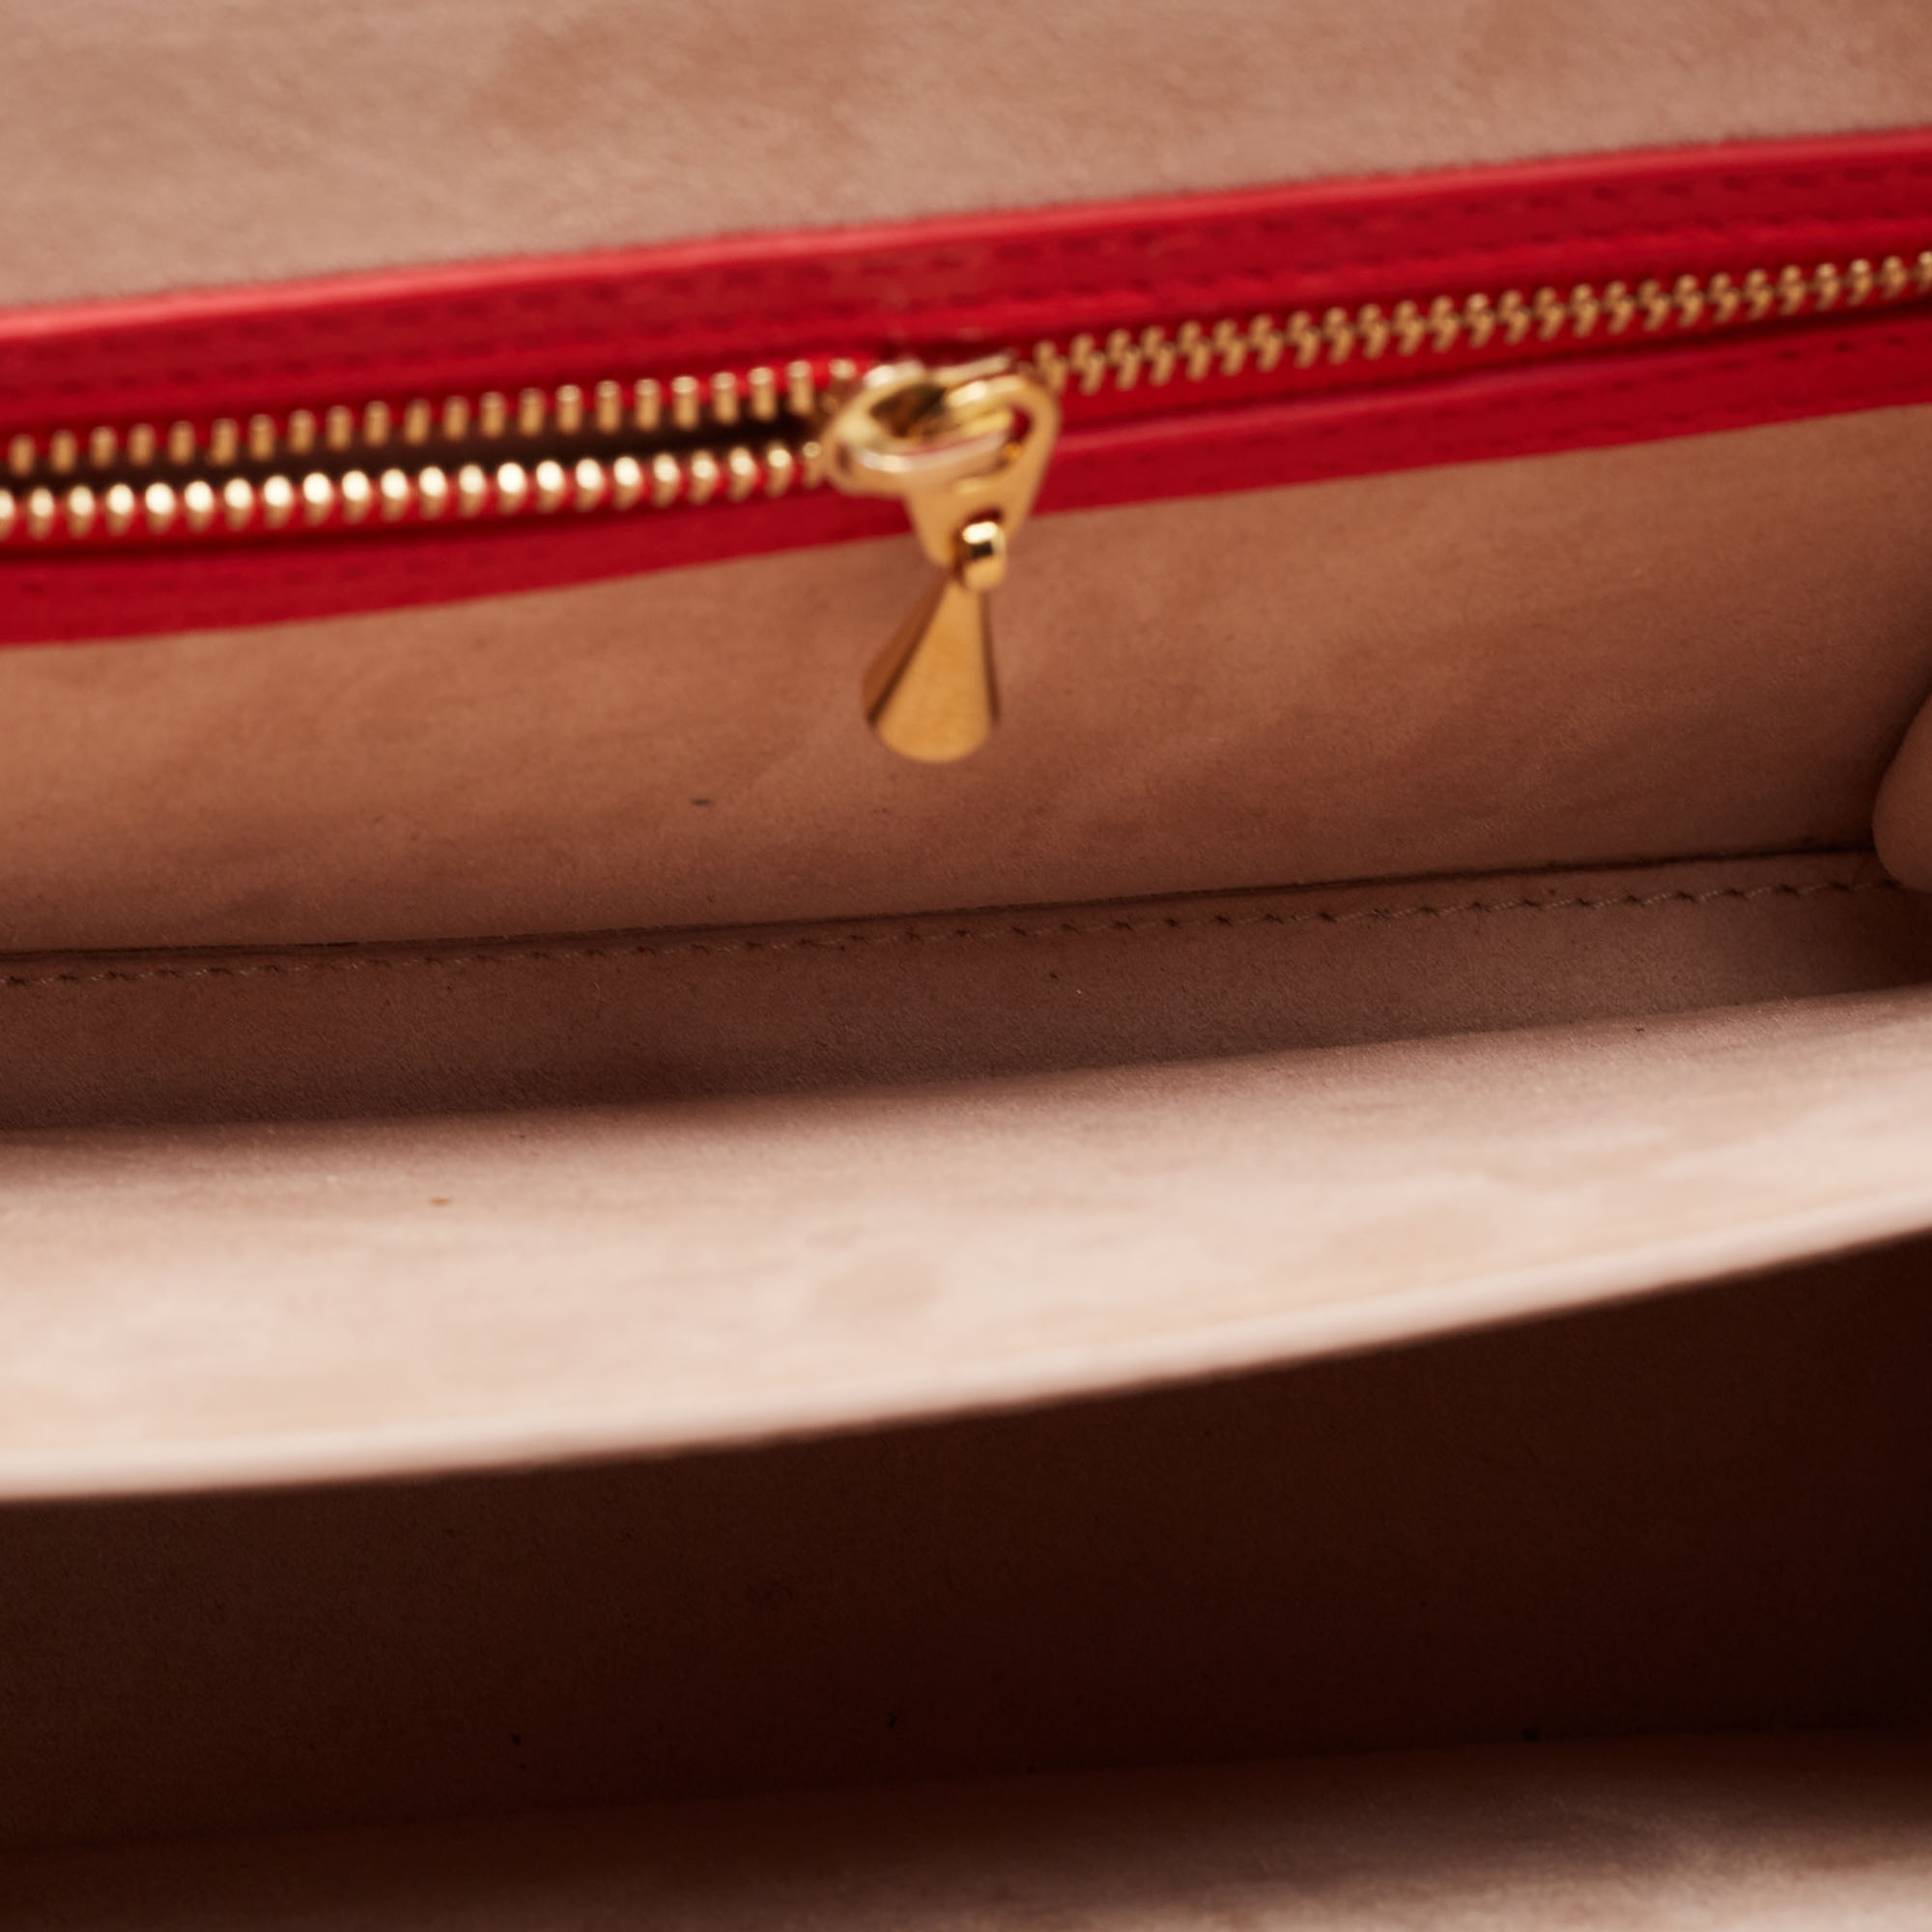 Alexander McQueen Red Leather Box Shoulder Bag